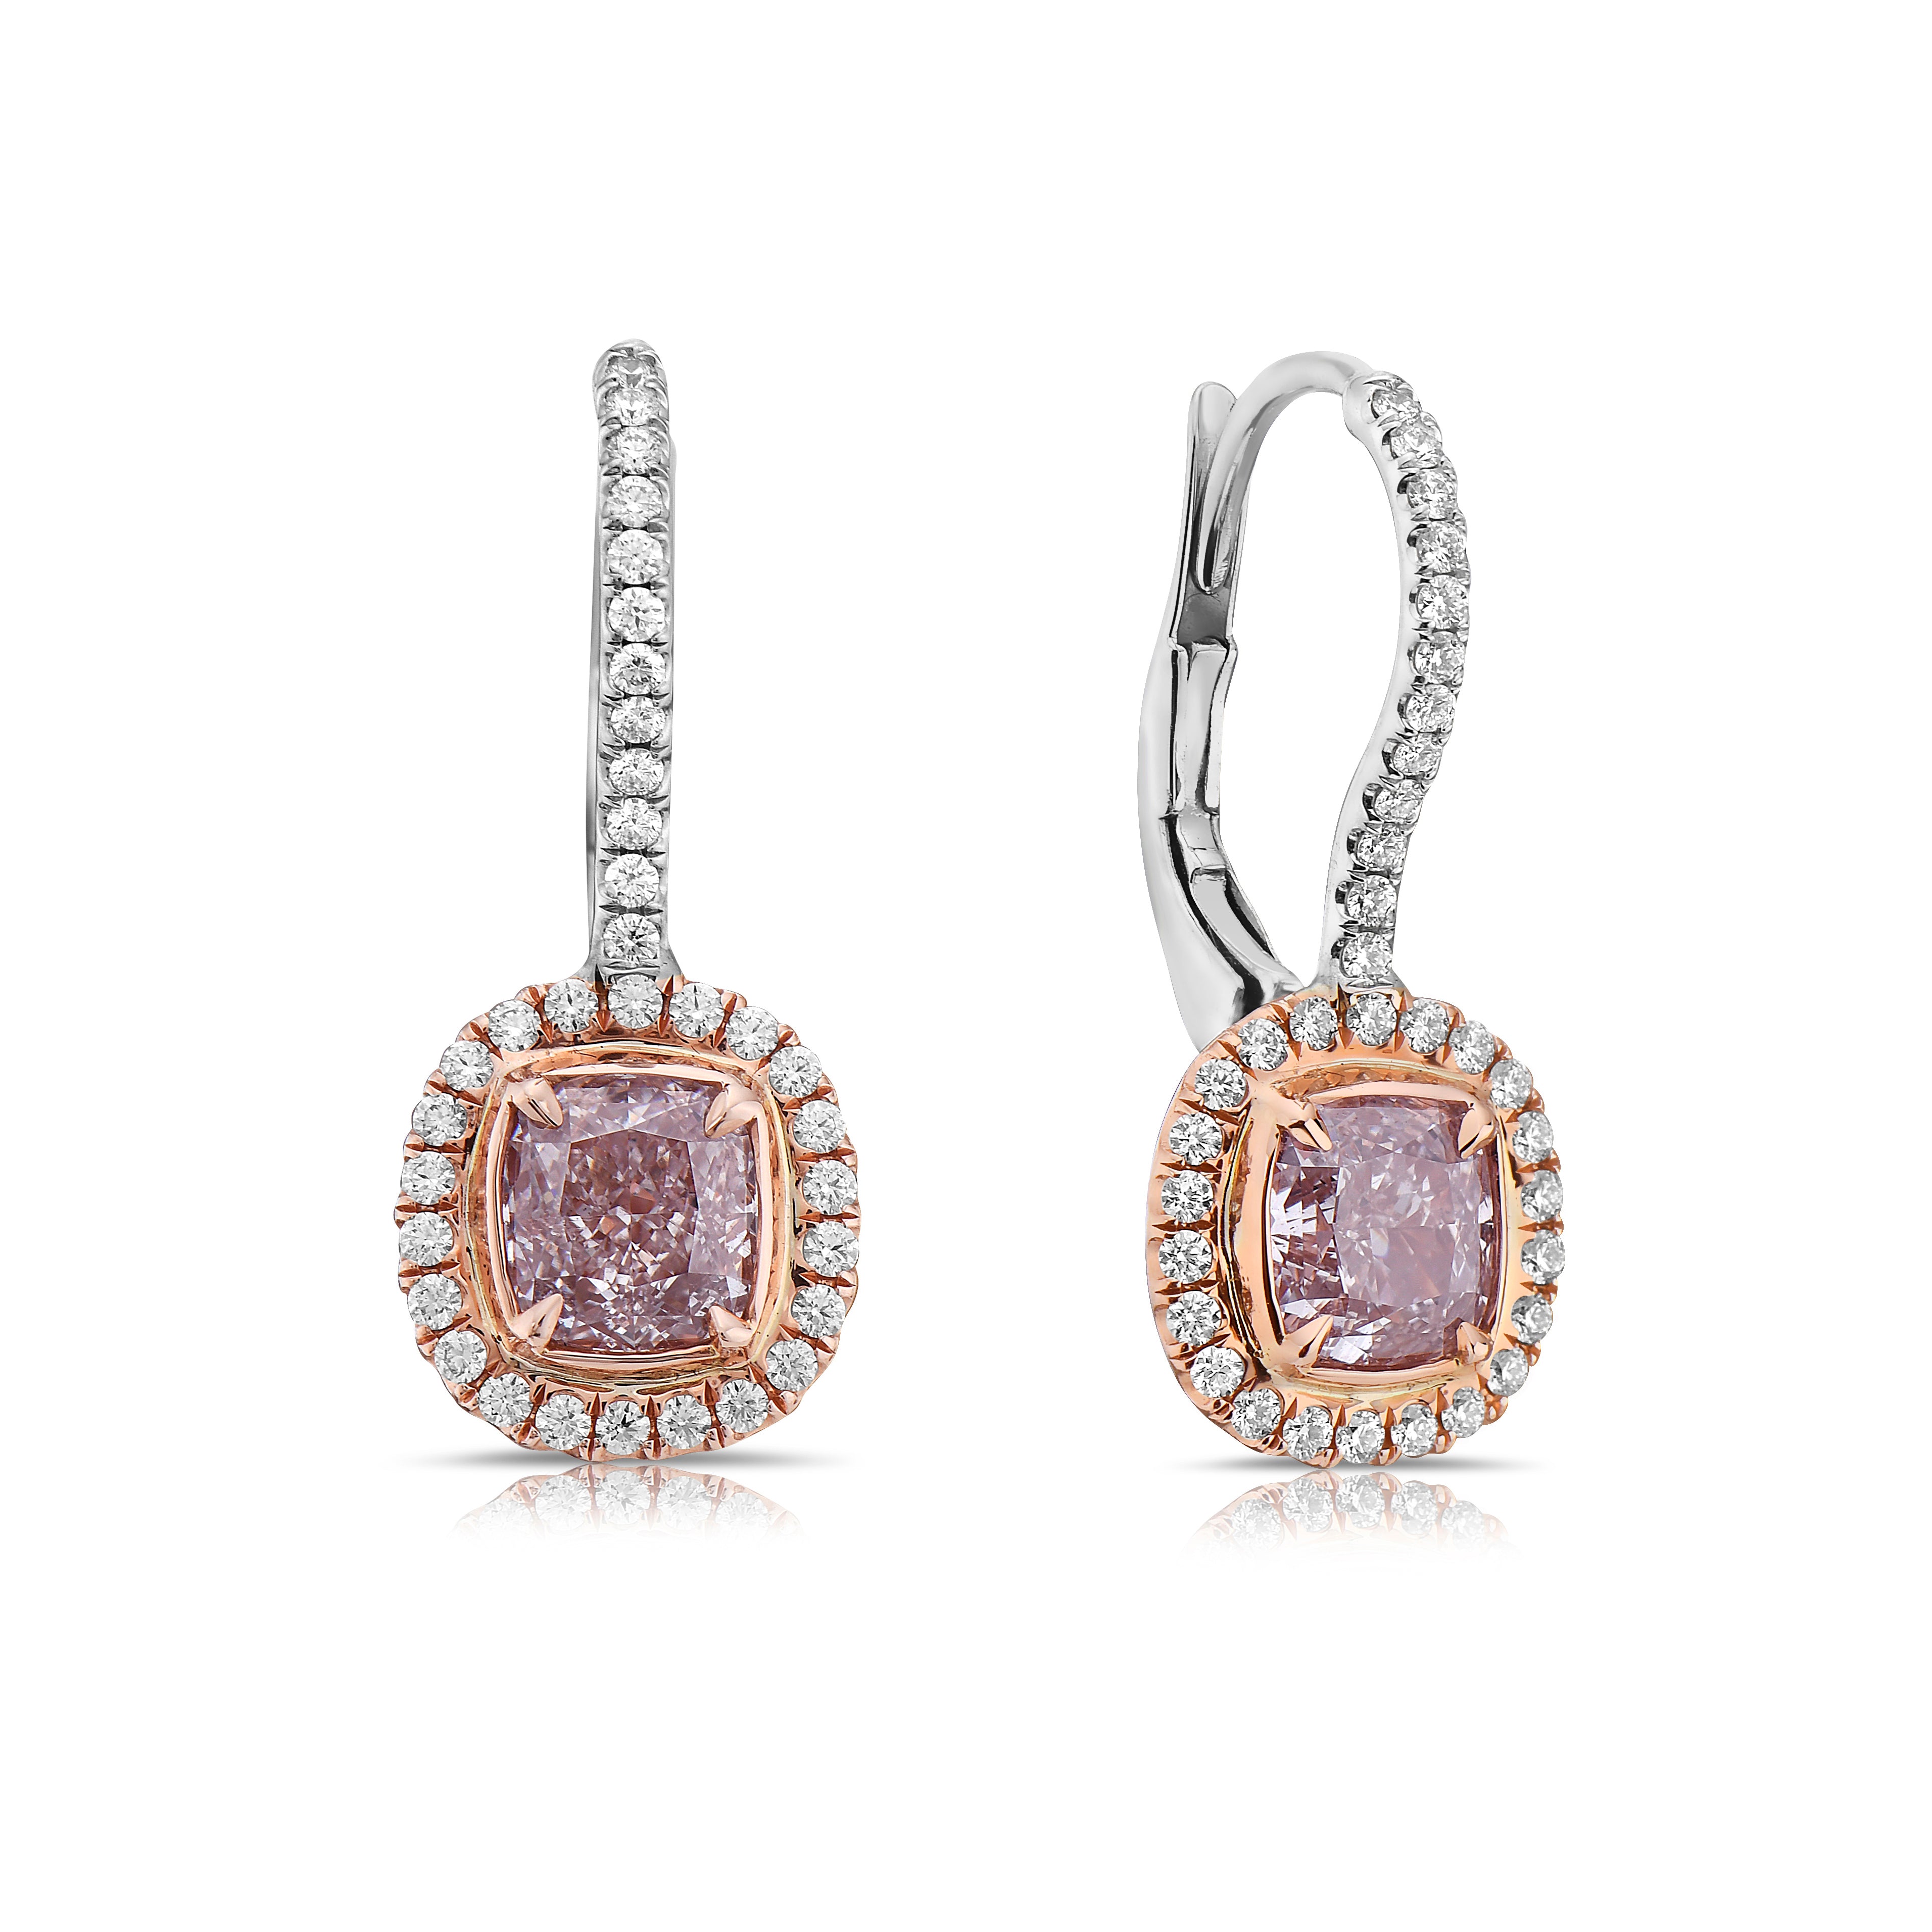 2.92ct Very Light Pink Cushion Diamond Drops Earrings